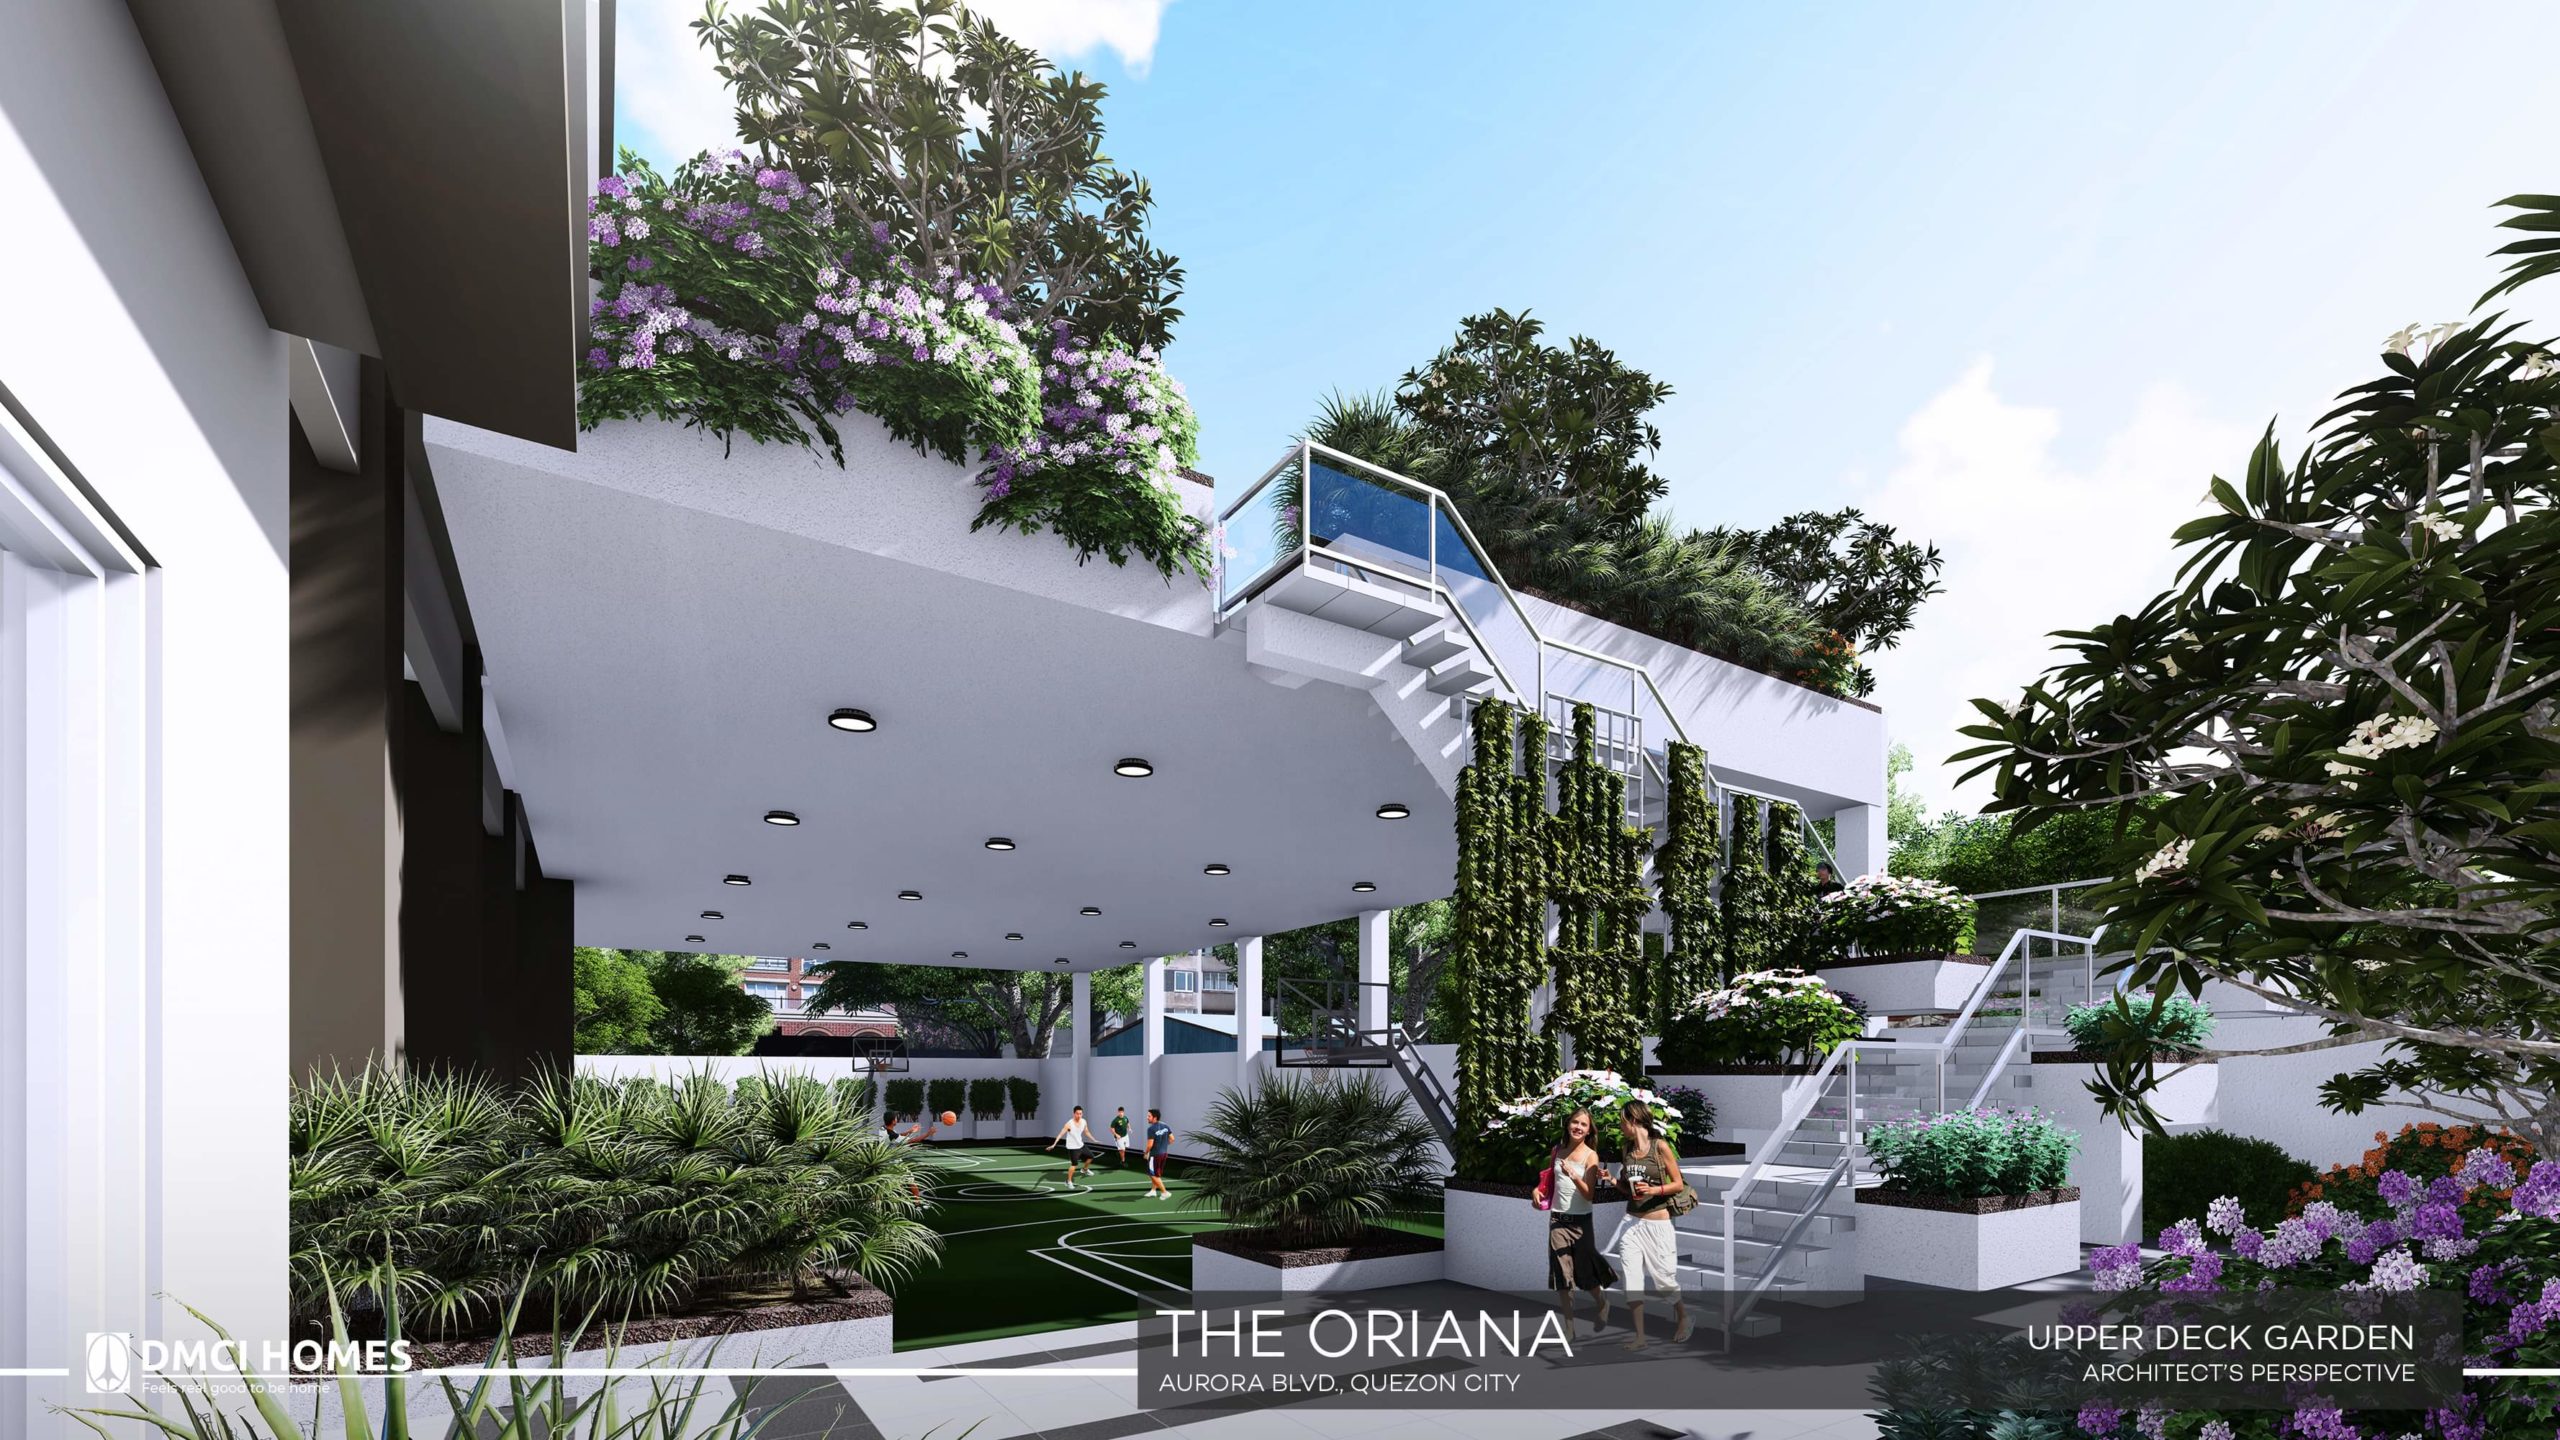 DMCI Homes' newest project located along Aurora Boulevard, Quezon City